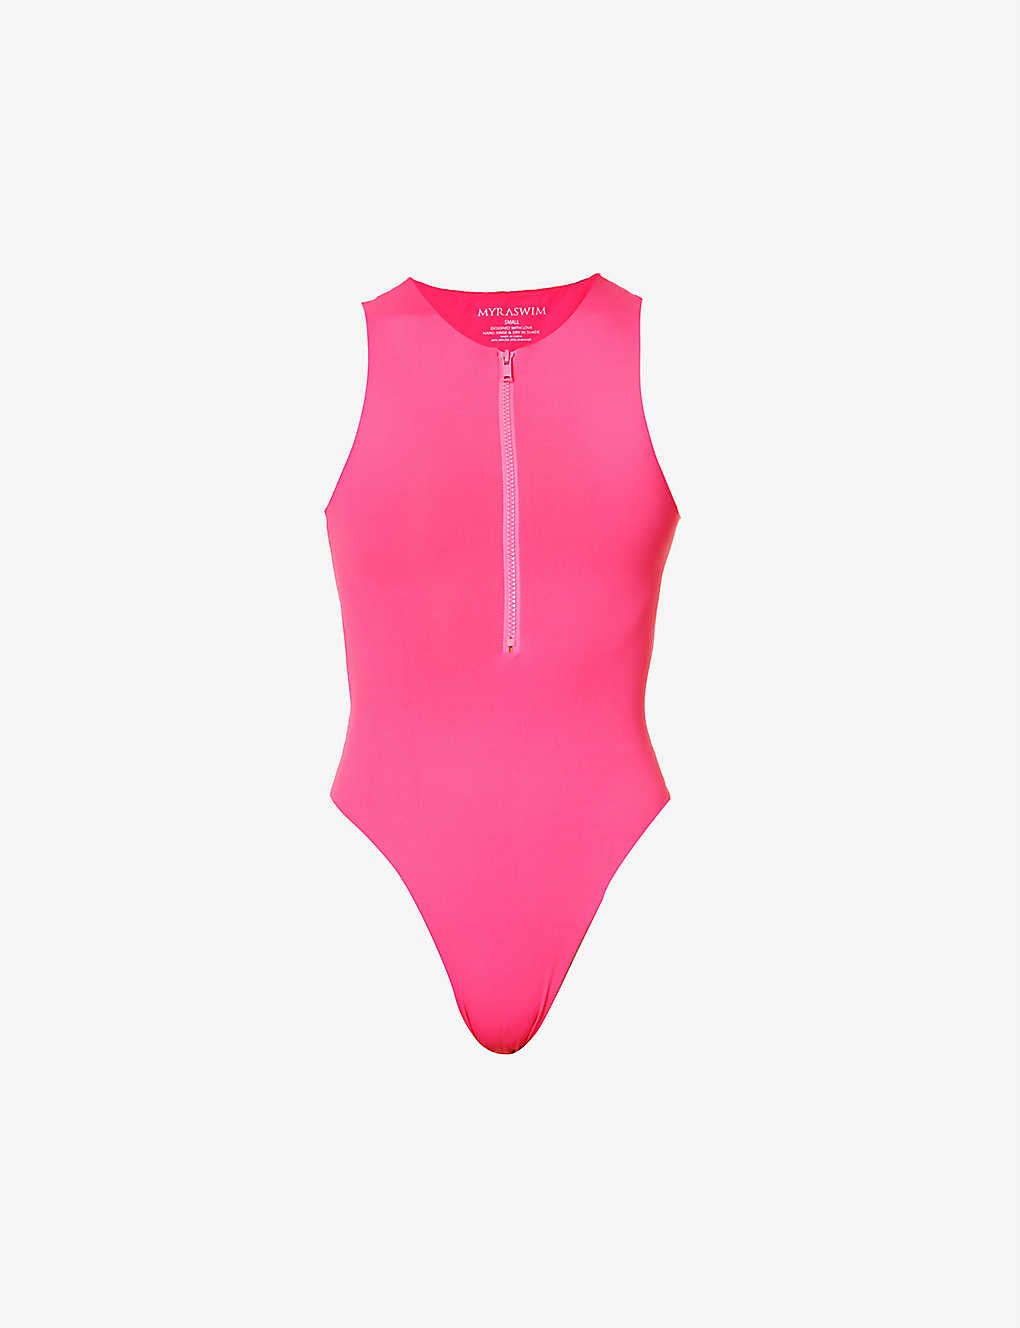 Davis zipped swimsuit | Selfridges